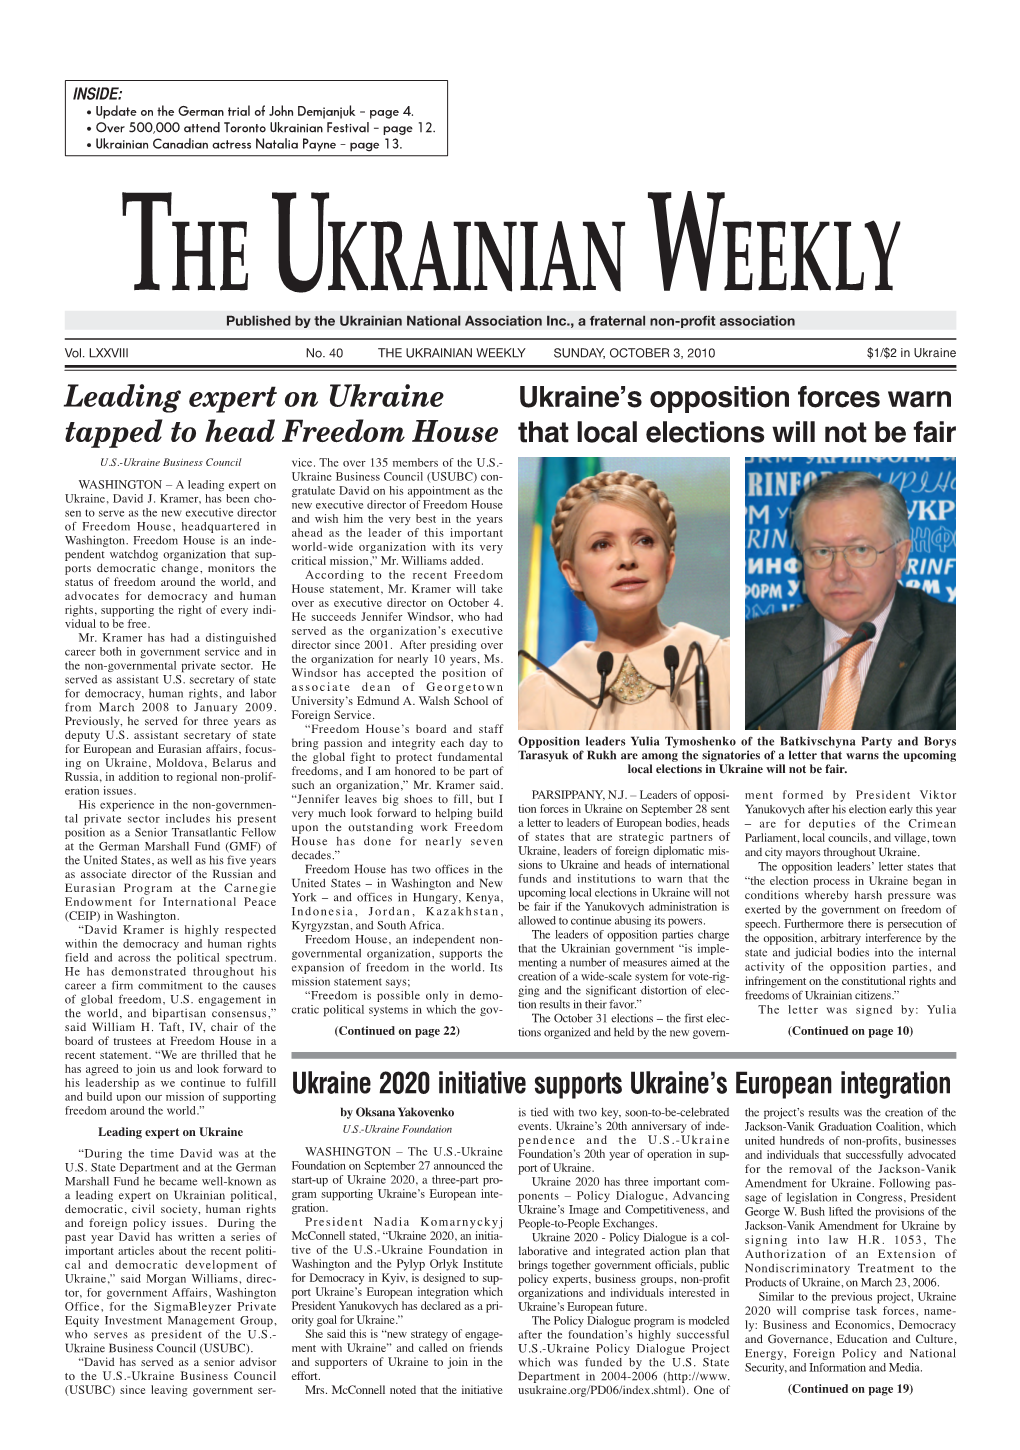 The Ukrainian Weekly 2010, No.40